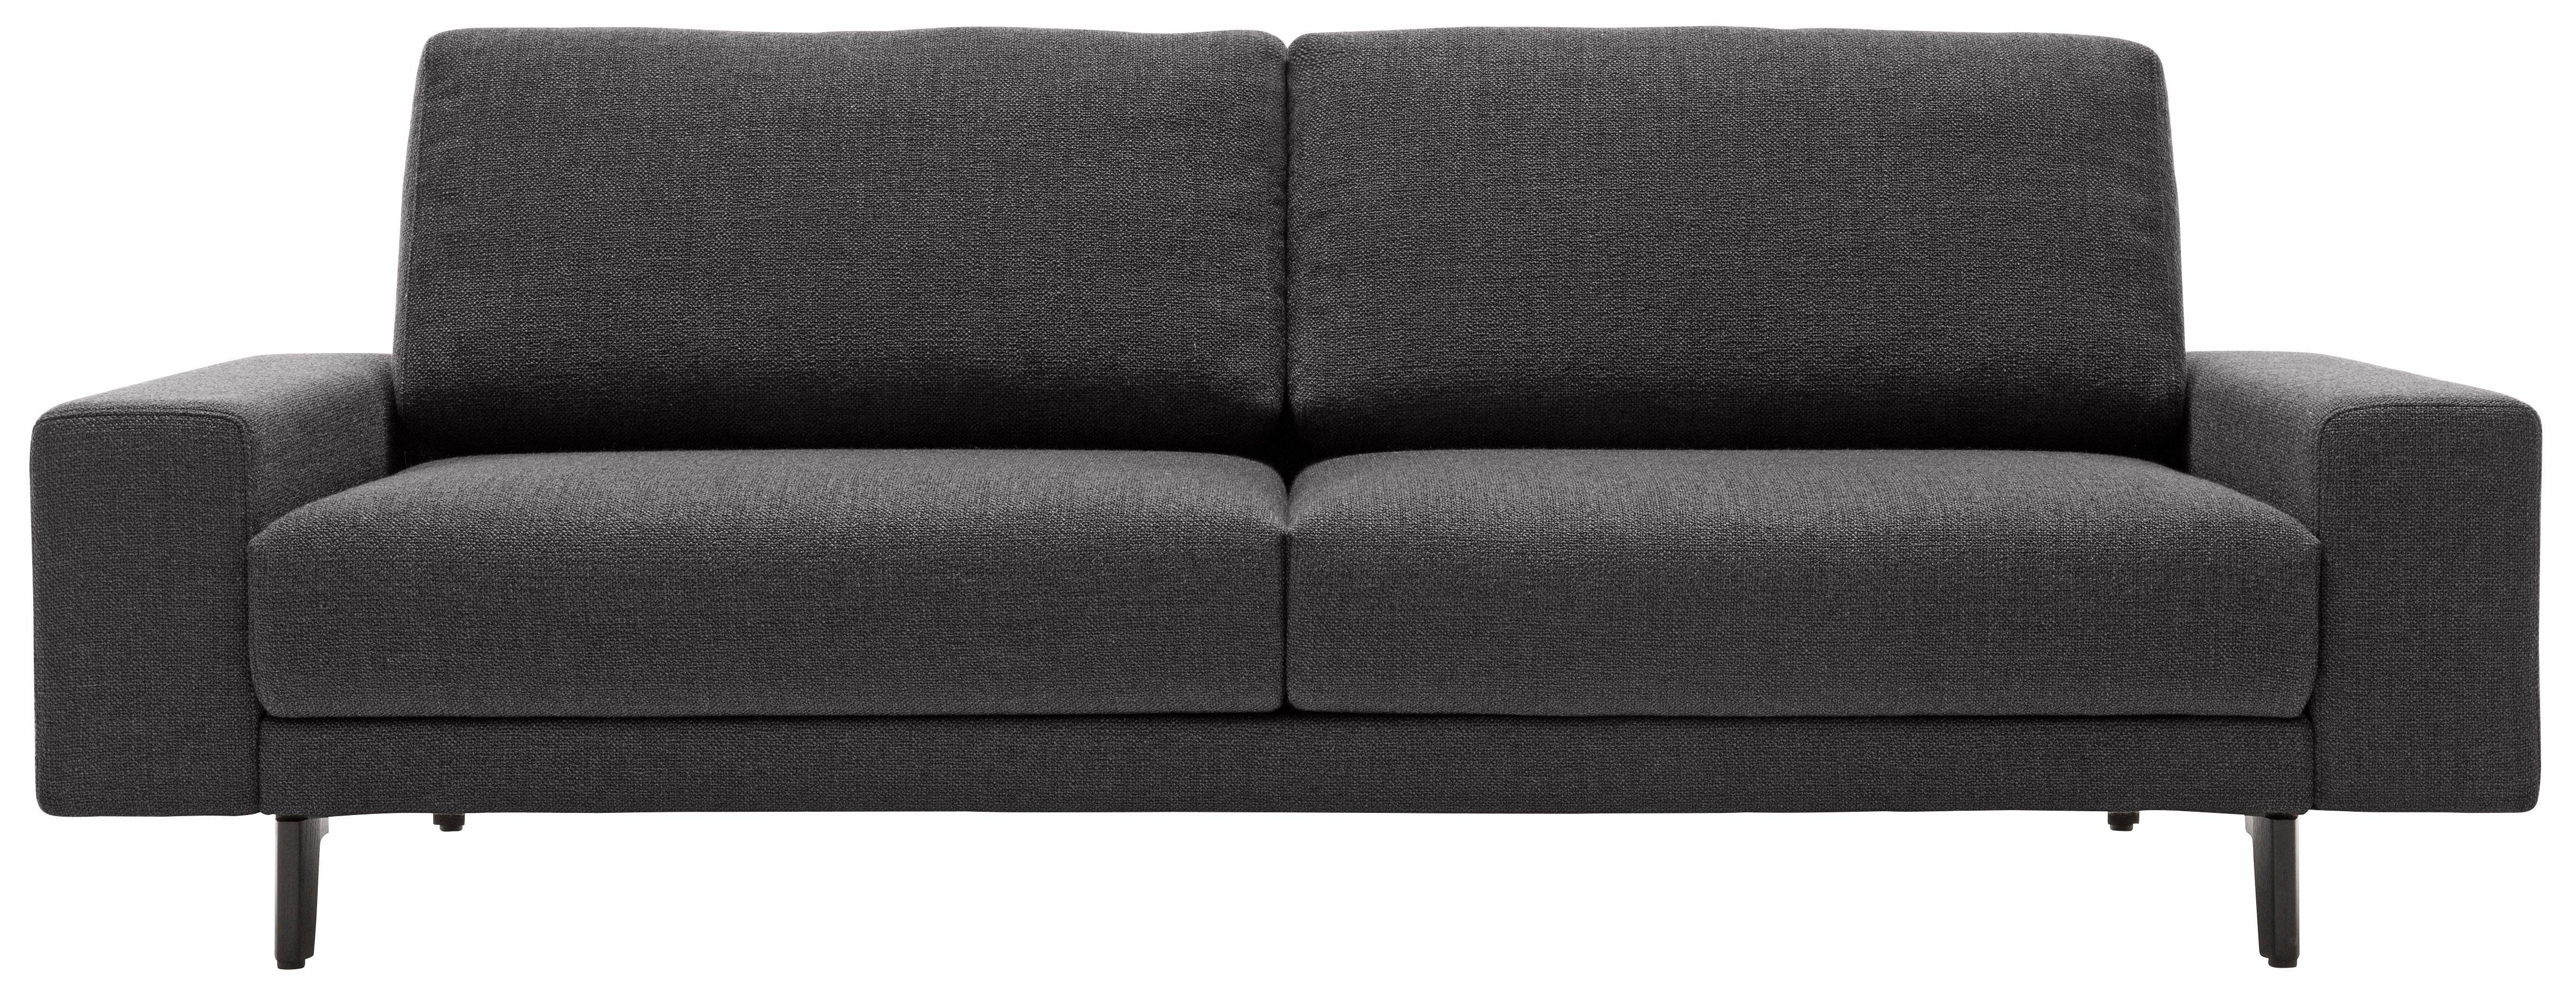 2-Sitzer breit 180 Breite niedrig, hülsta Armlehne in hs.450, sofa Alugussfüße cm umbragrau,